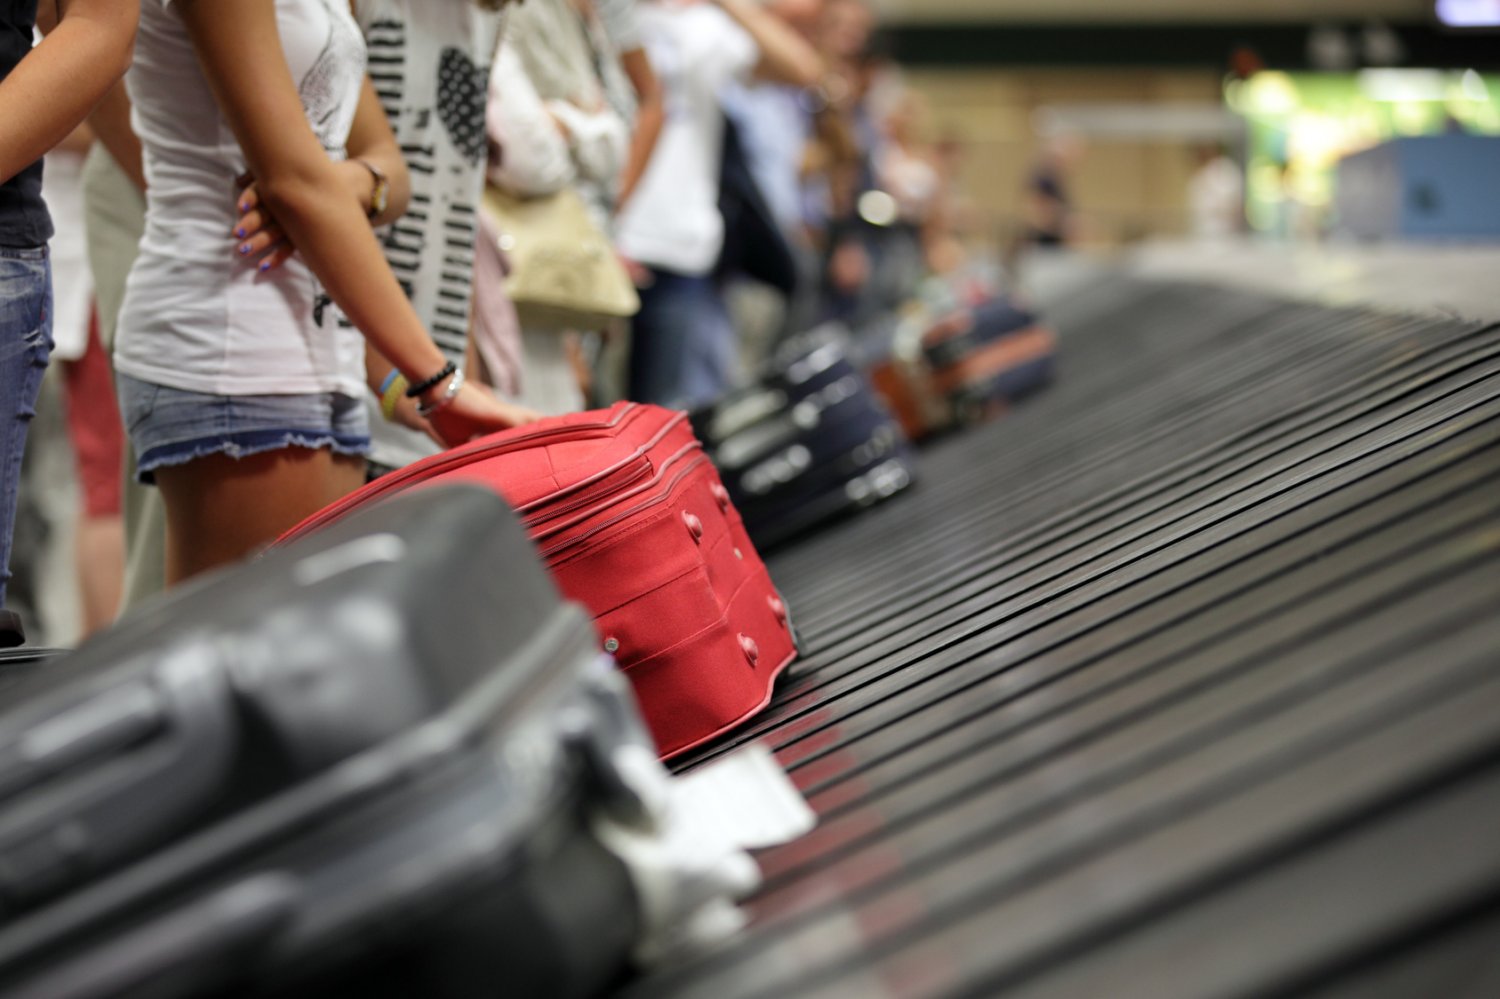 Compagnies low cost : vers la fin des bagages cabine payants ? 